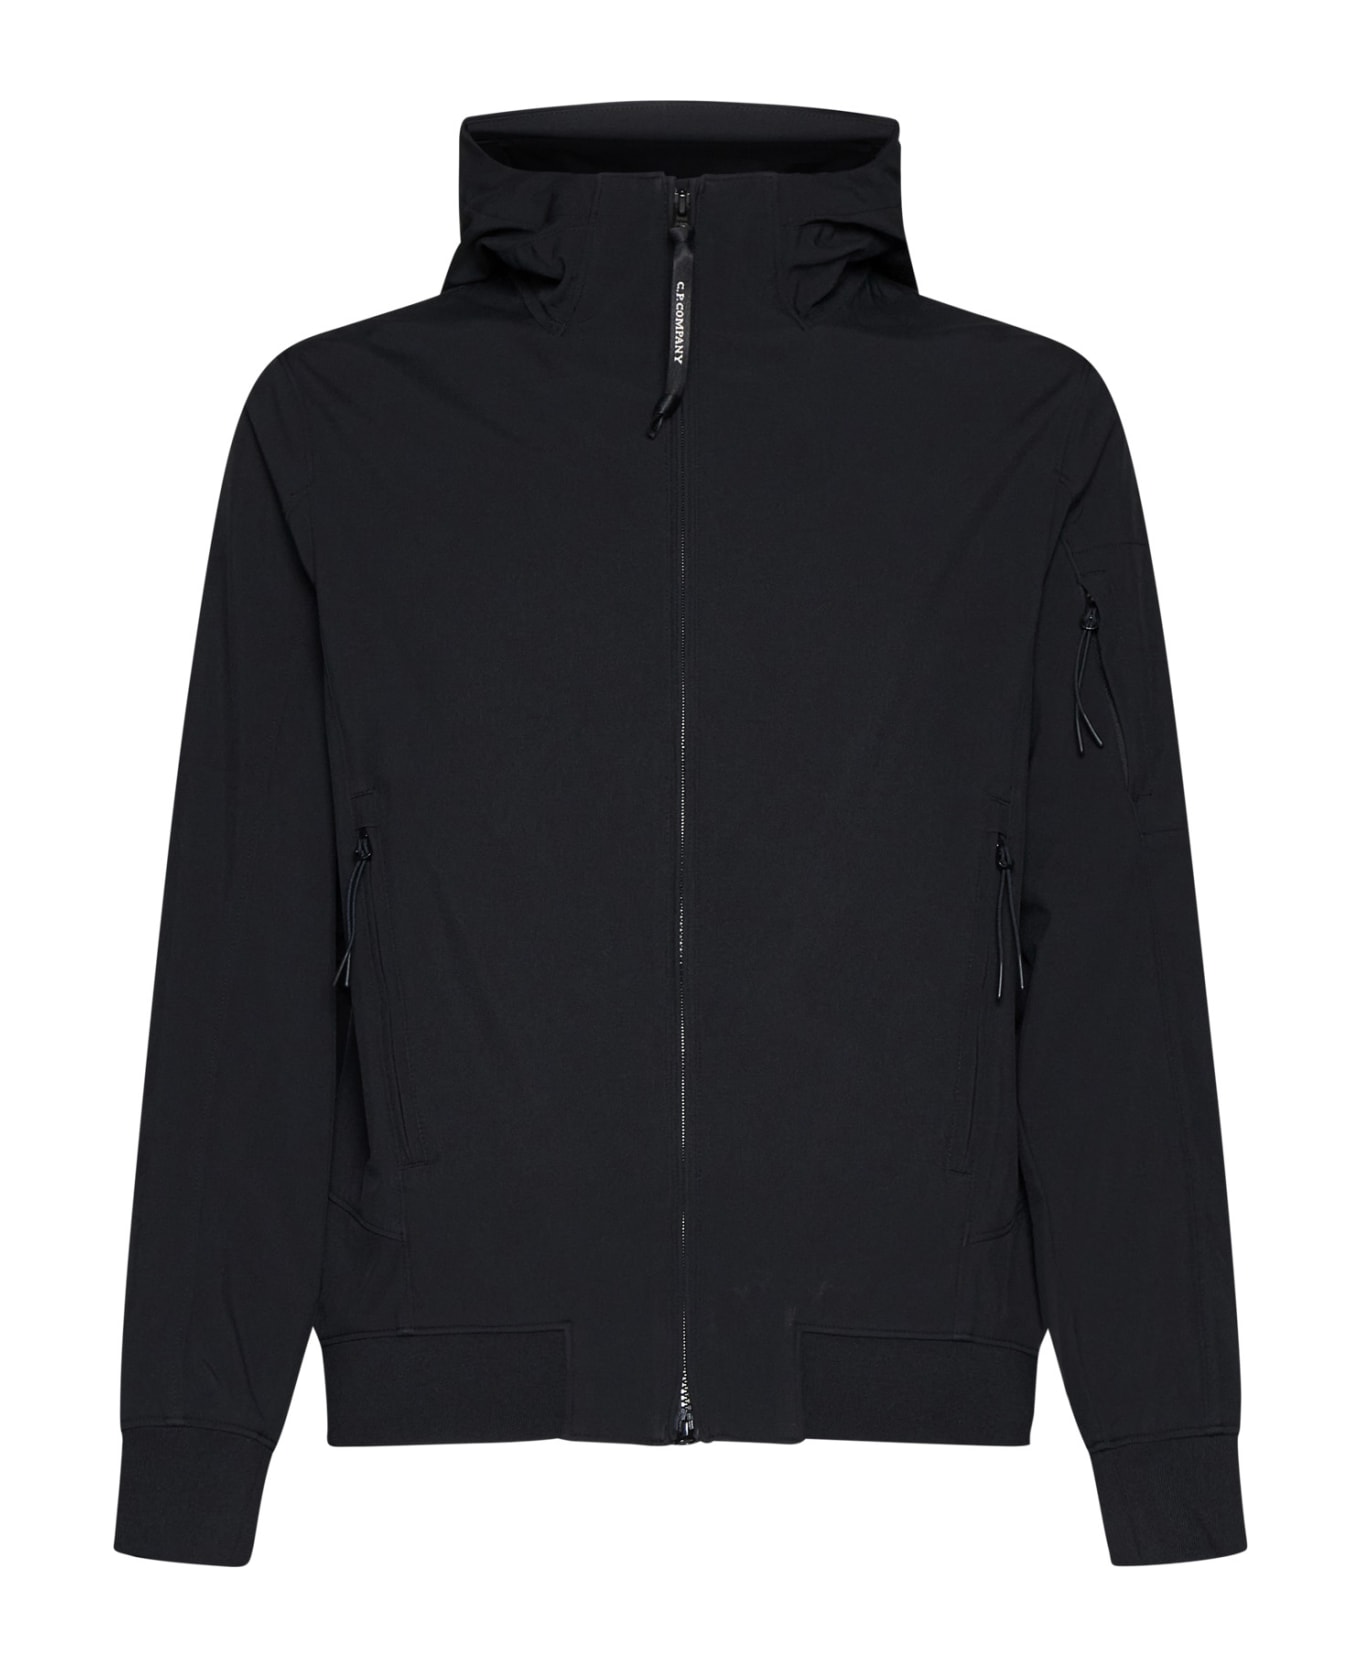 C.P. Company 'outerwear' Jacket - BLACK